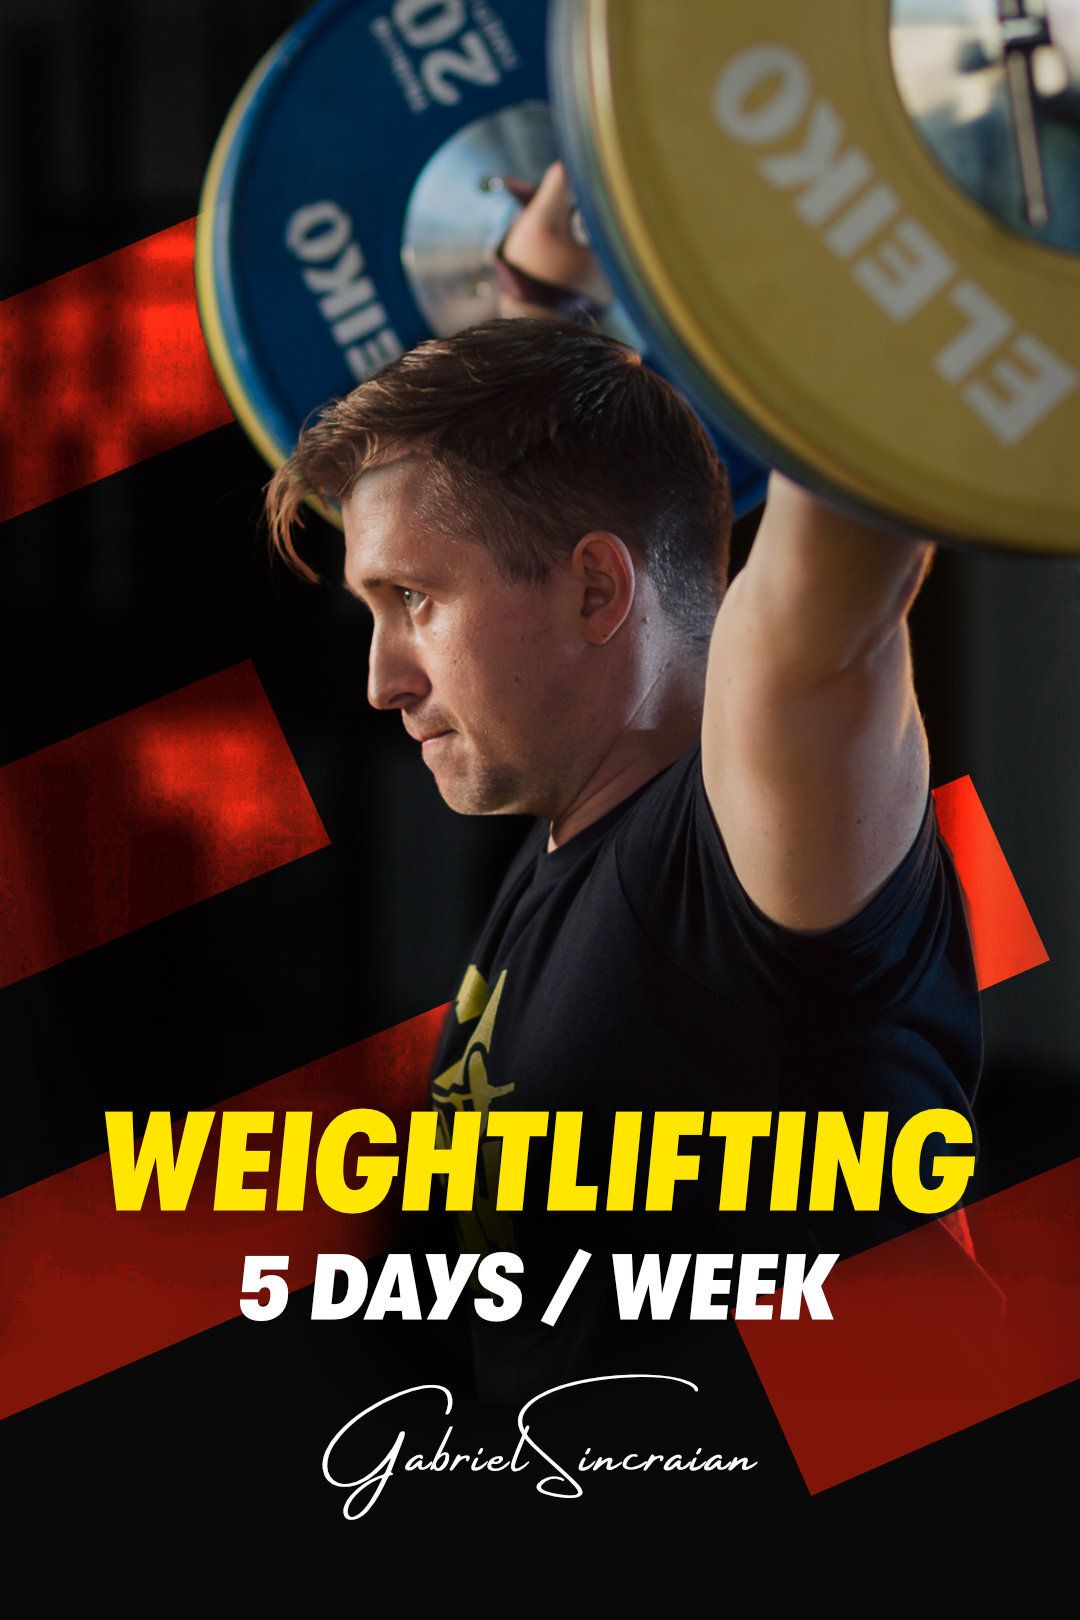 Gabriel Sîncrăian - 5 Days / Week Weightlifting